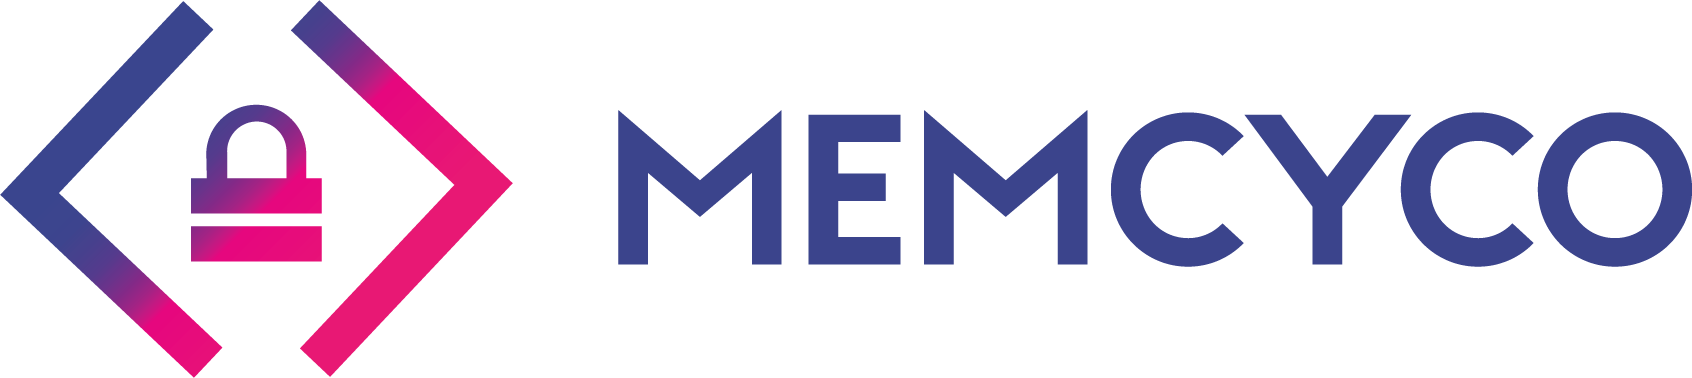 Memcyco logo - color on transparent background